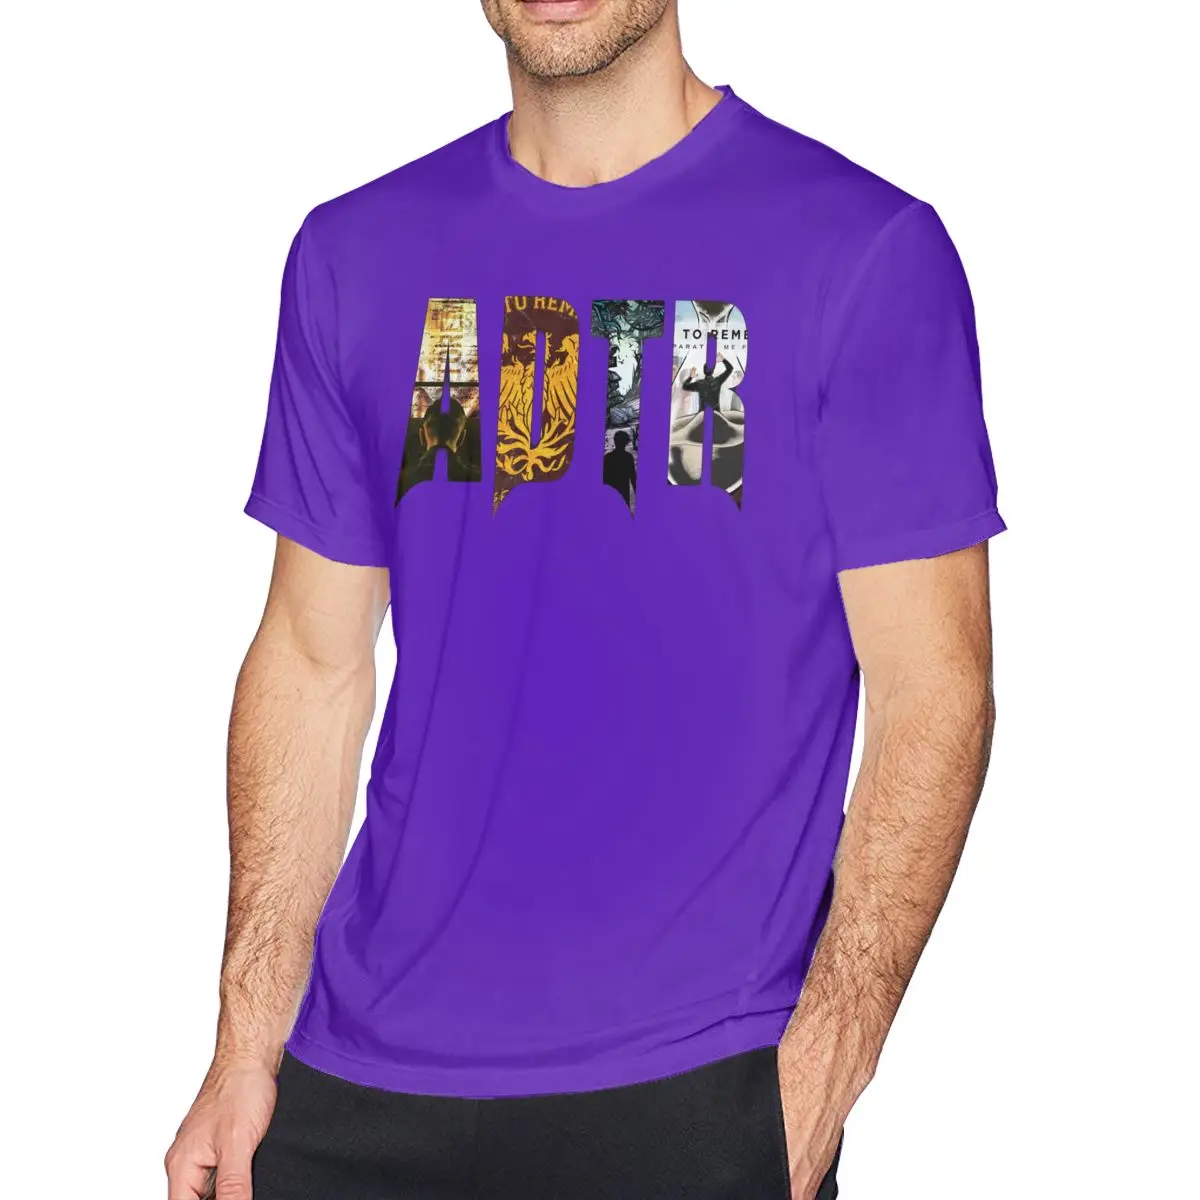 Футболка «A Day To Remember» футболка из 100 хлопка с короткими рукавами забавная футболка - Color: Purple